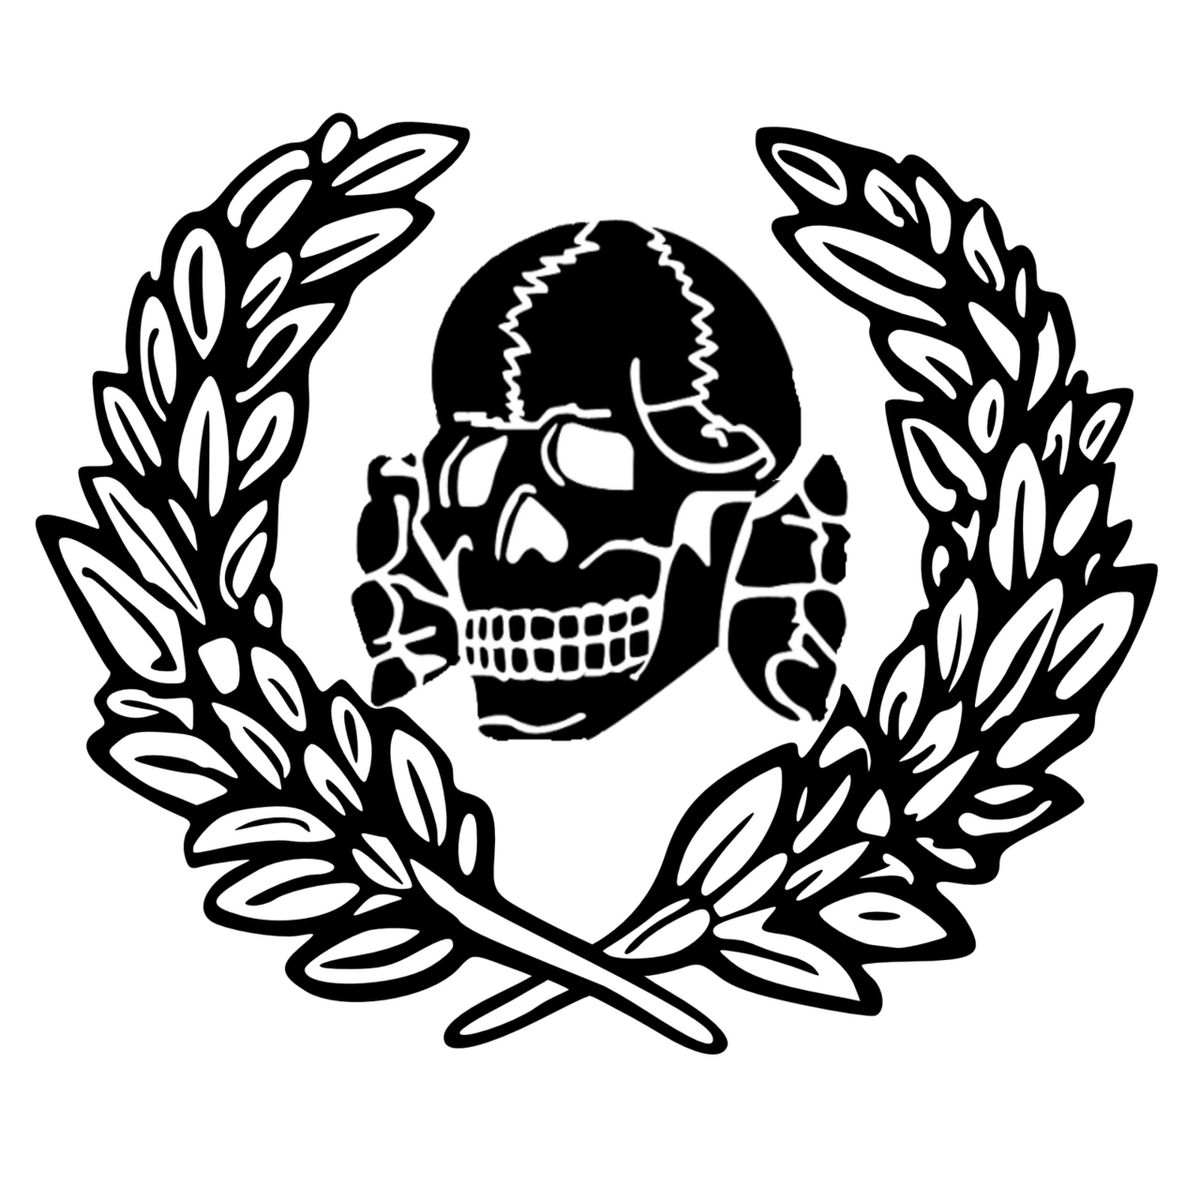 German SS Deathhead Totenkopf wreath skull vinyl decal sticker